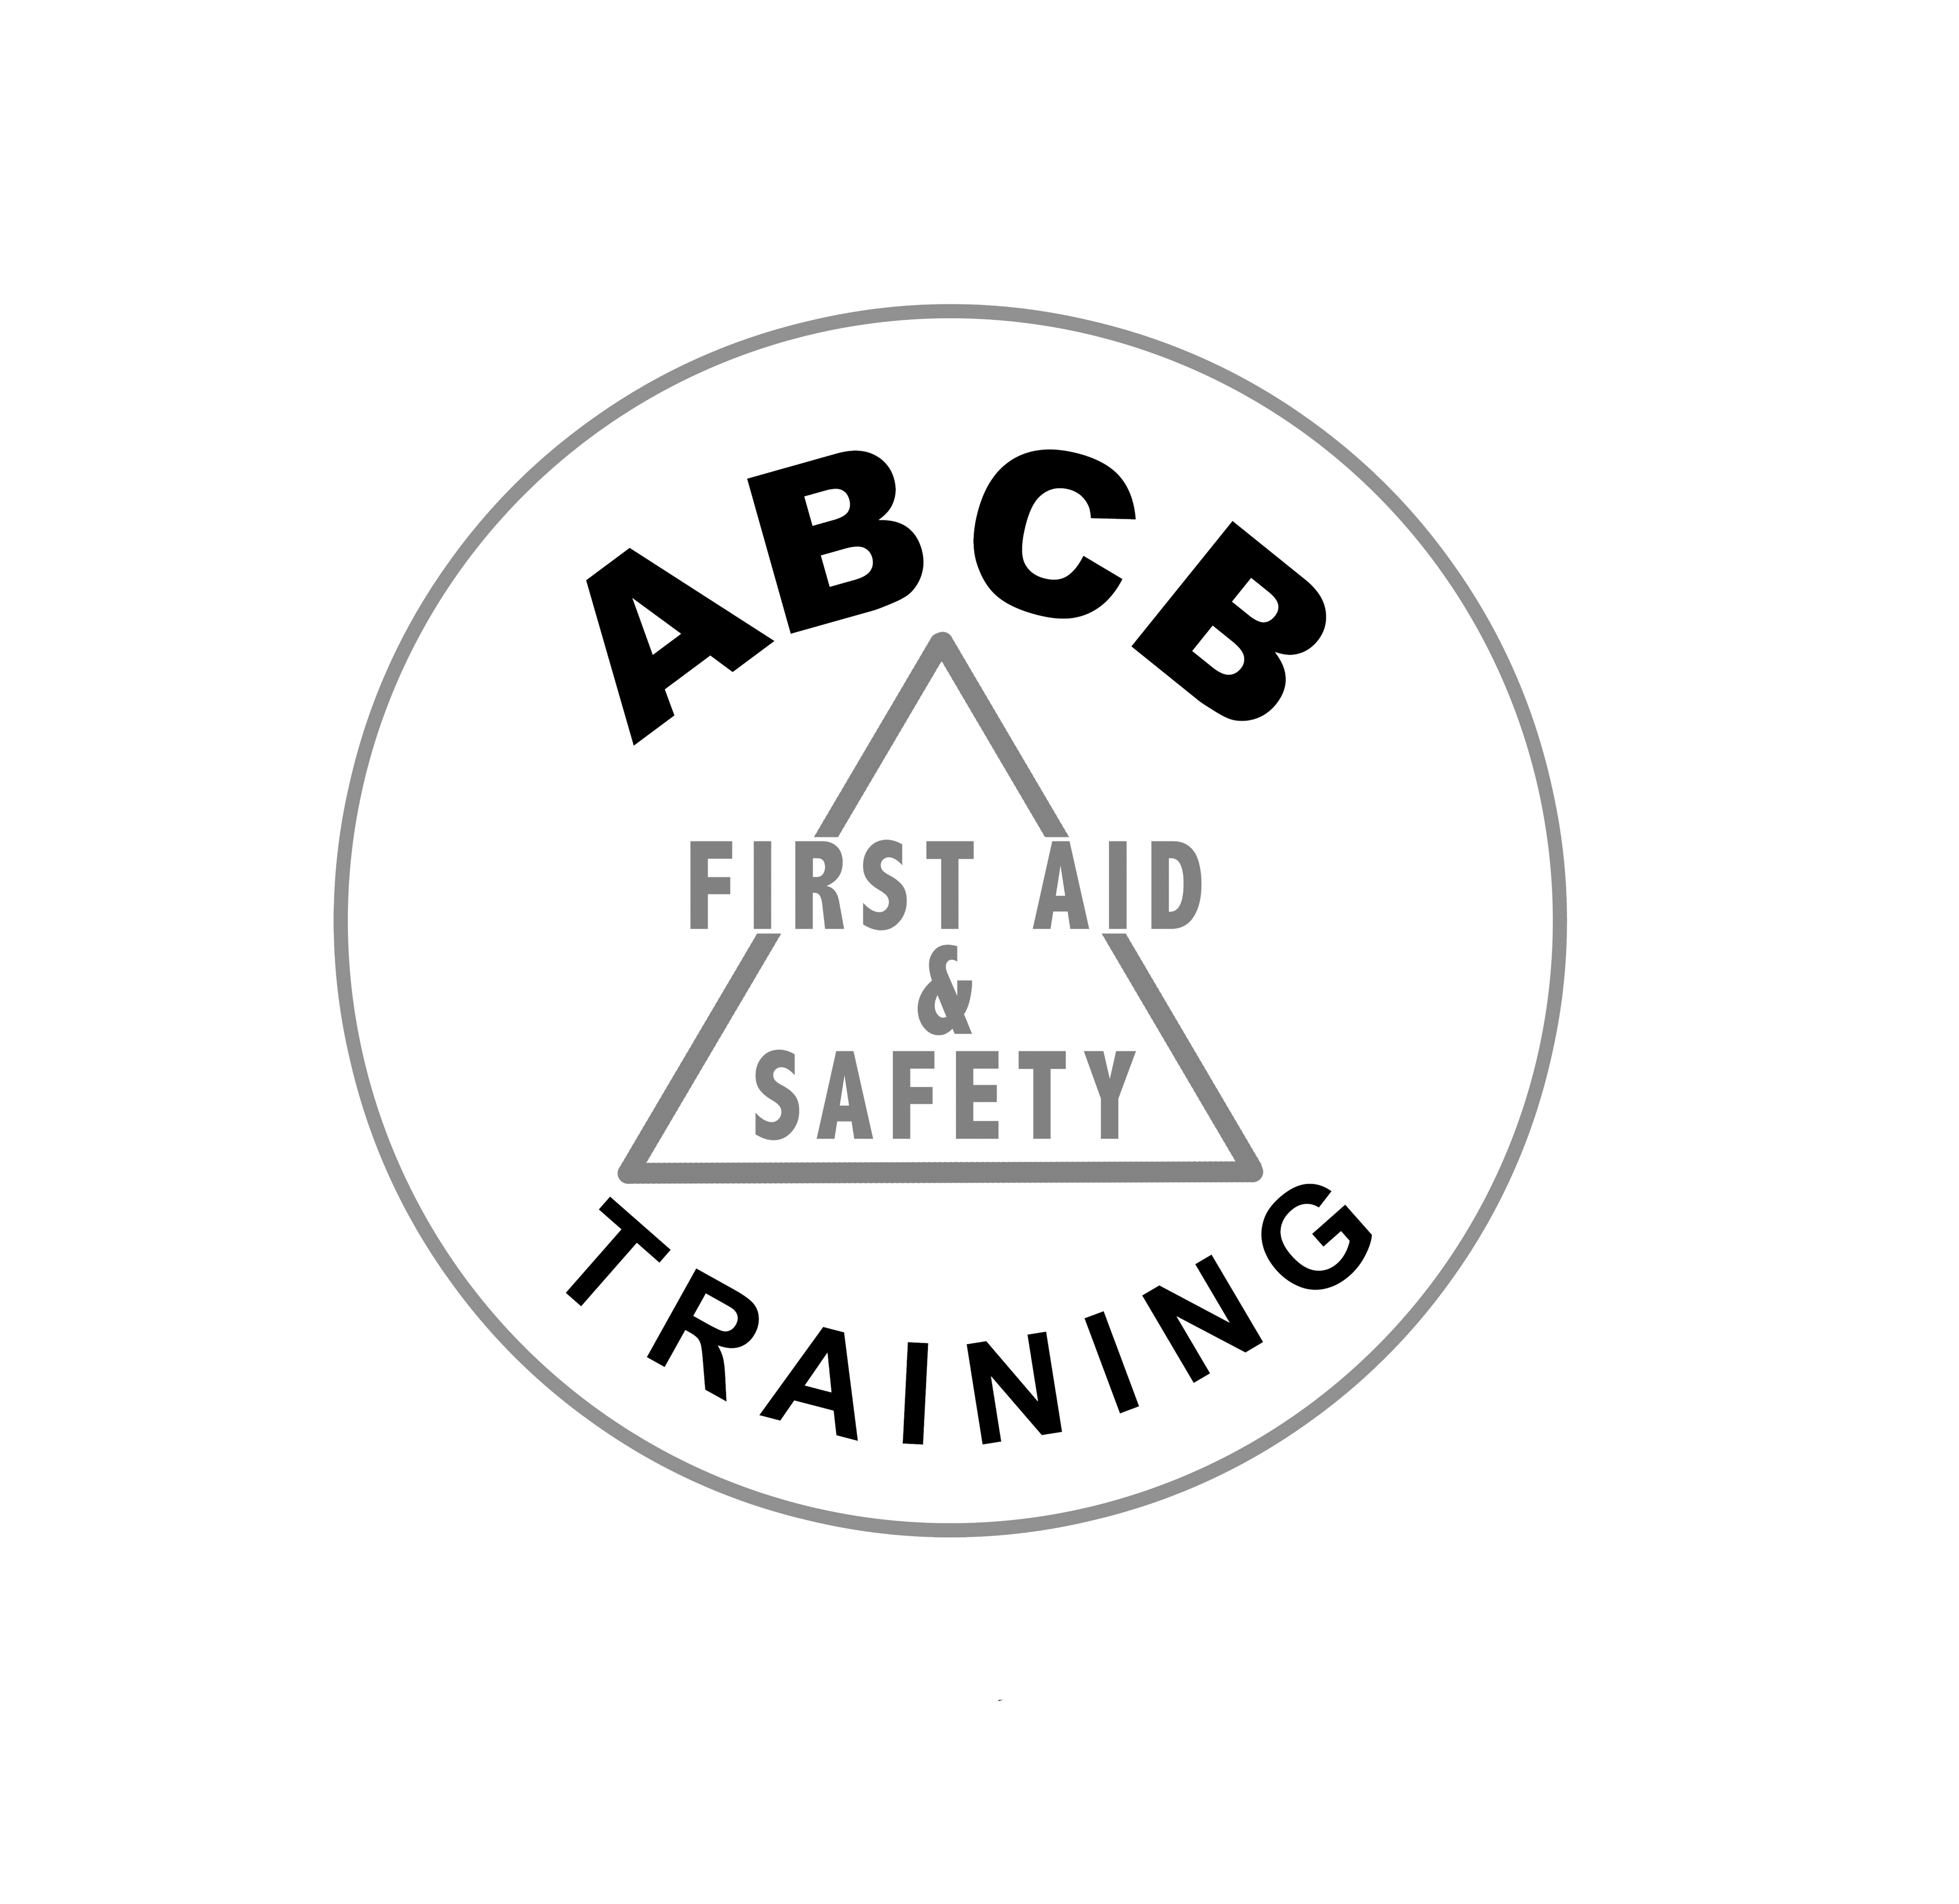 Nanaimo ABCB First Aid